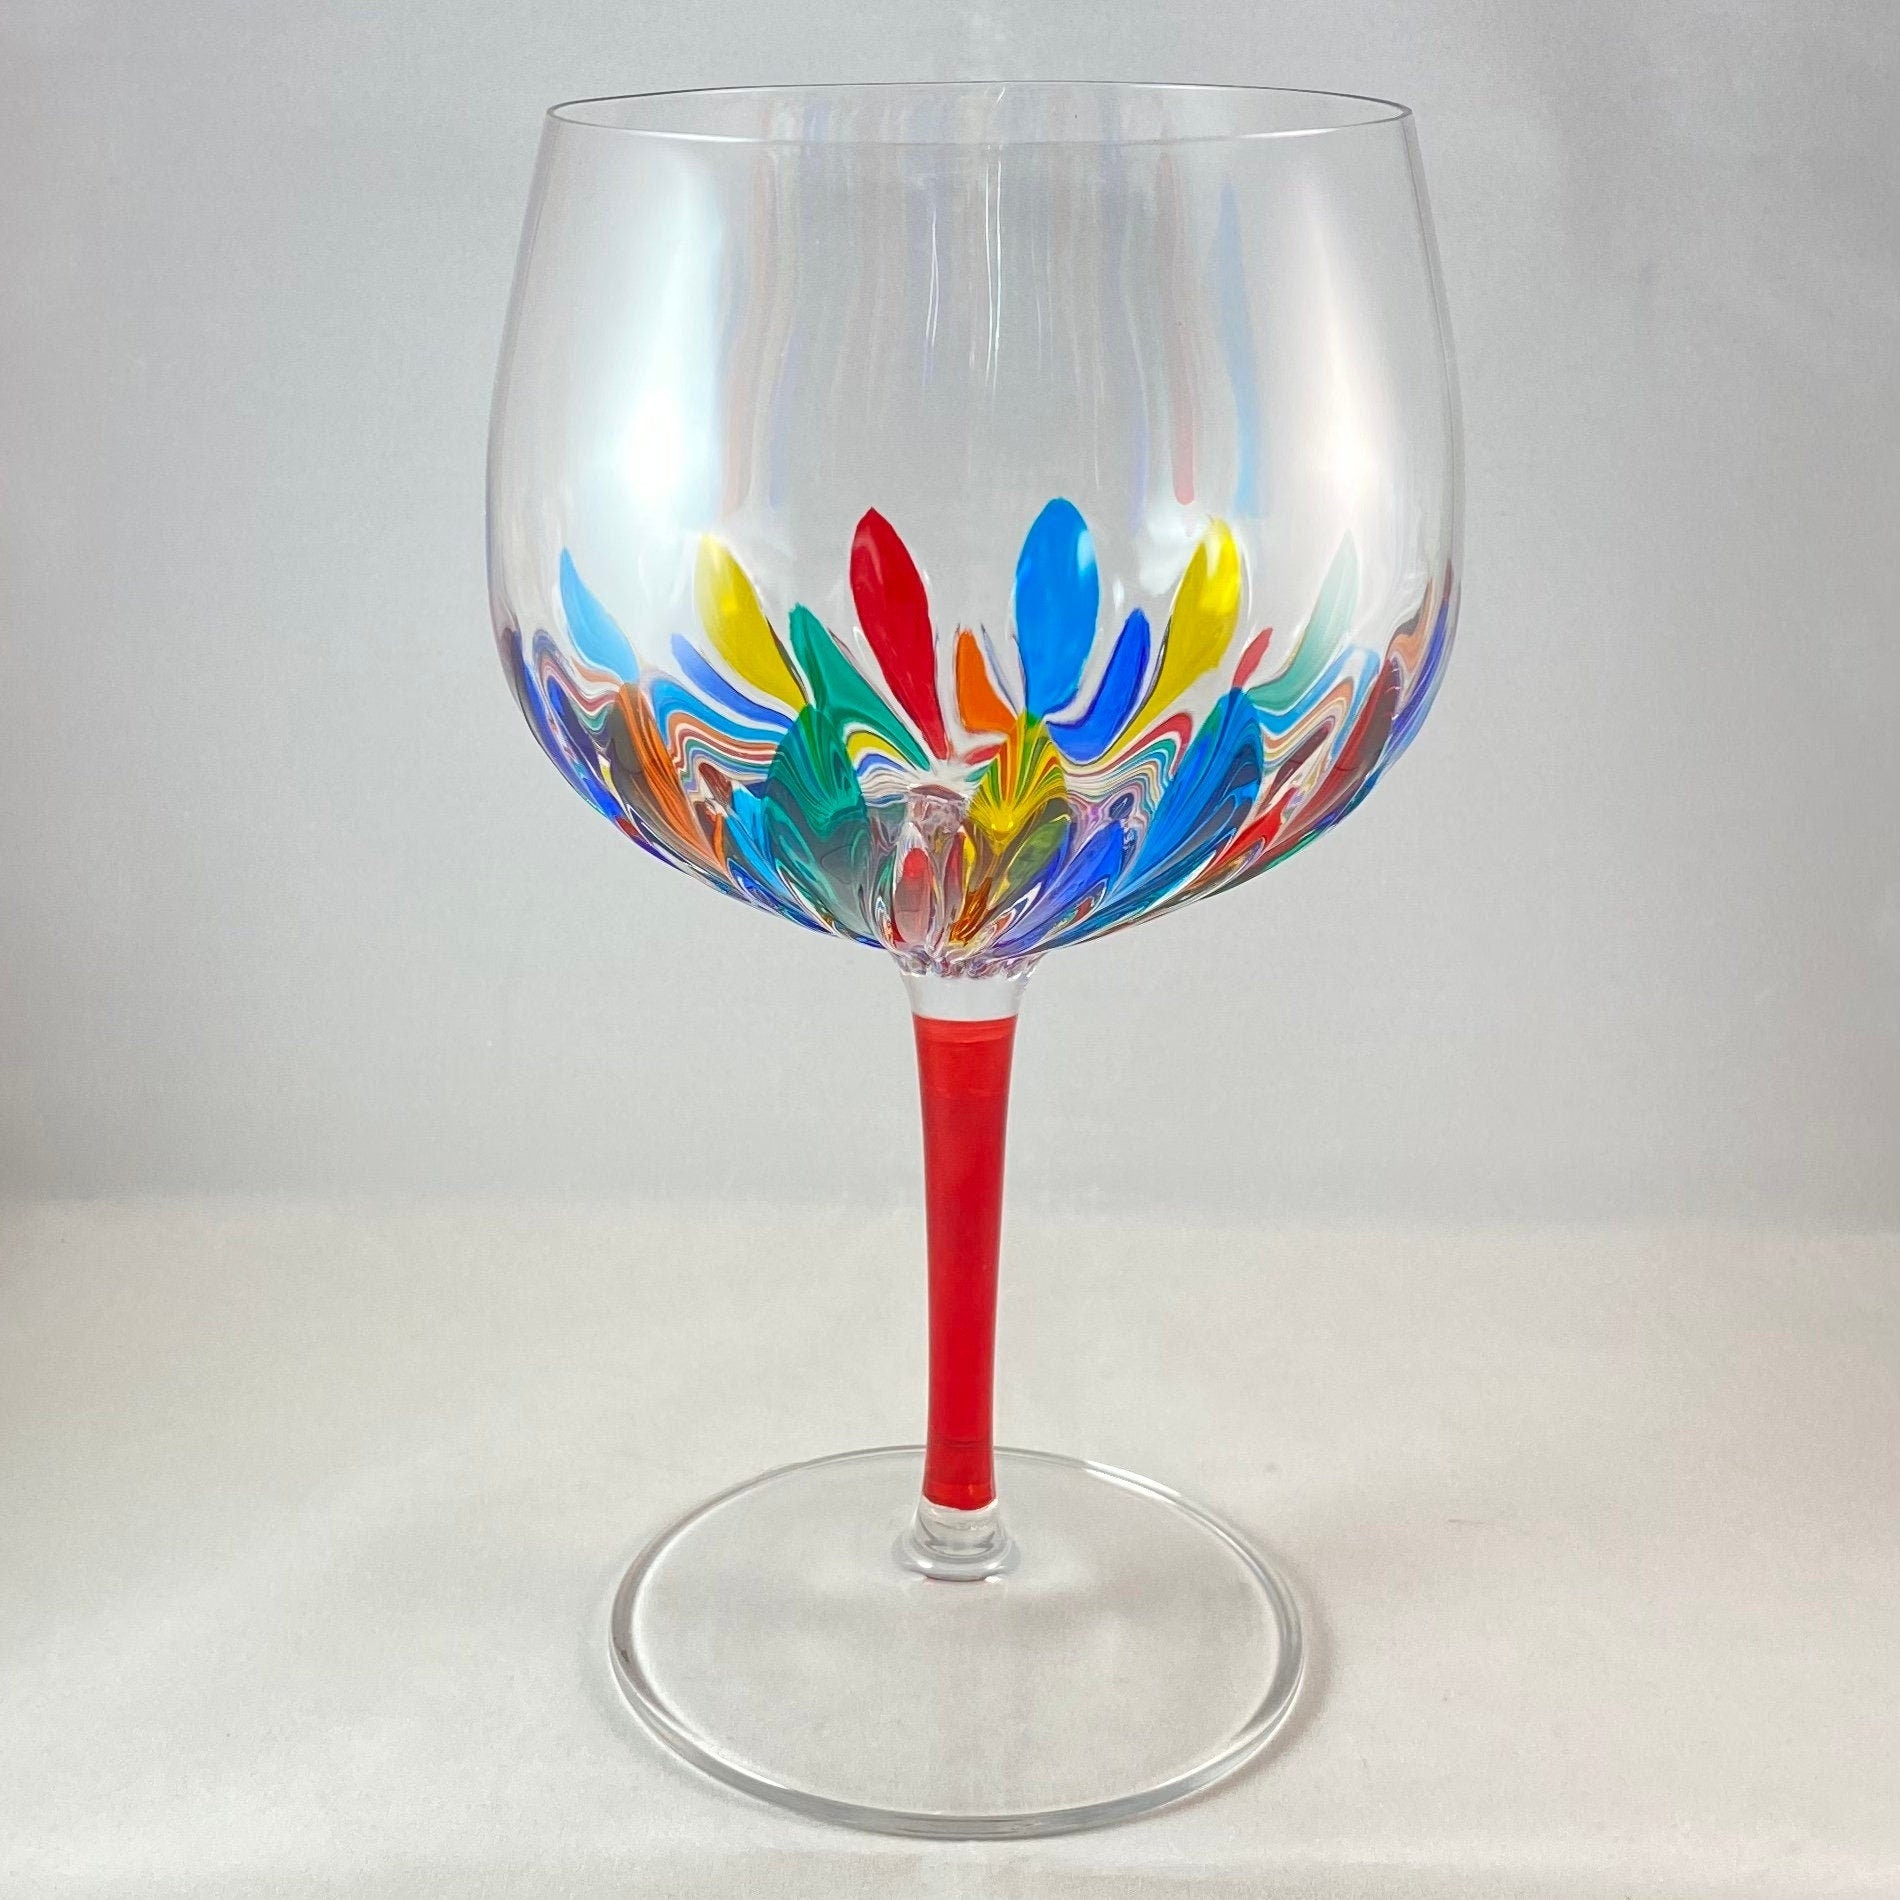 Red Stem Incanto Large Venetian Wine/Gin Glass - Handmade in Italy, Colorful Murano Glass